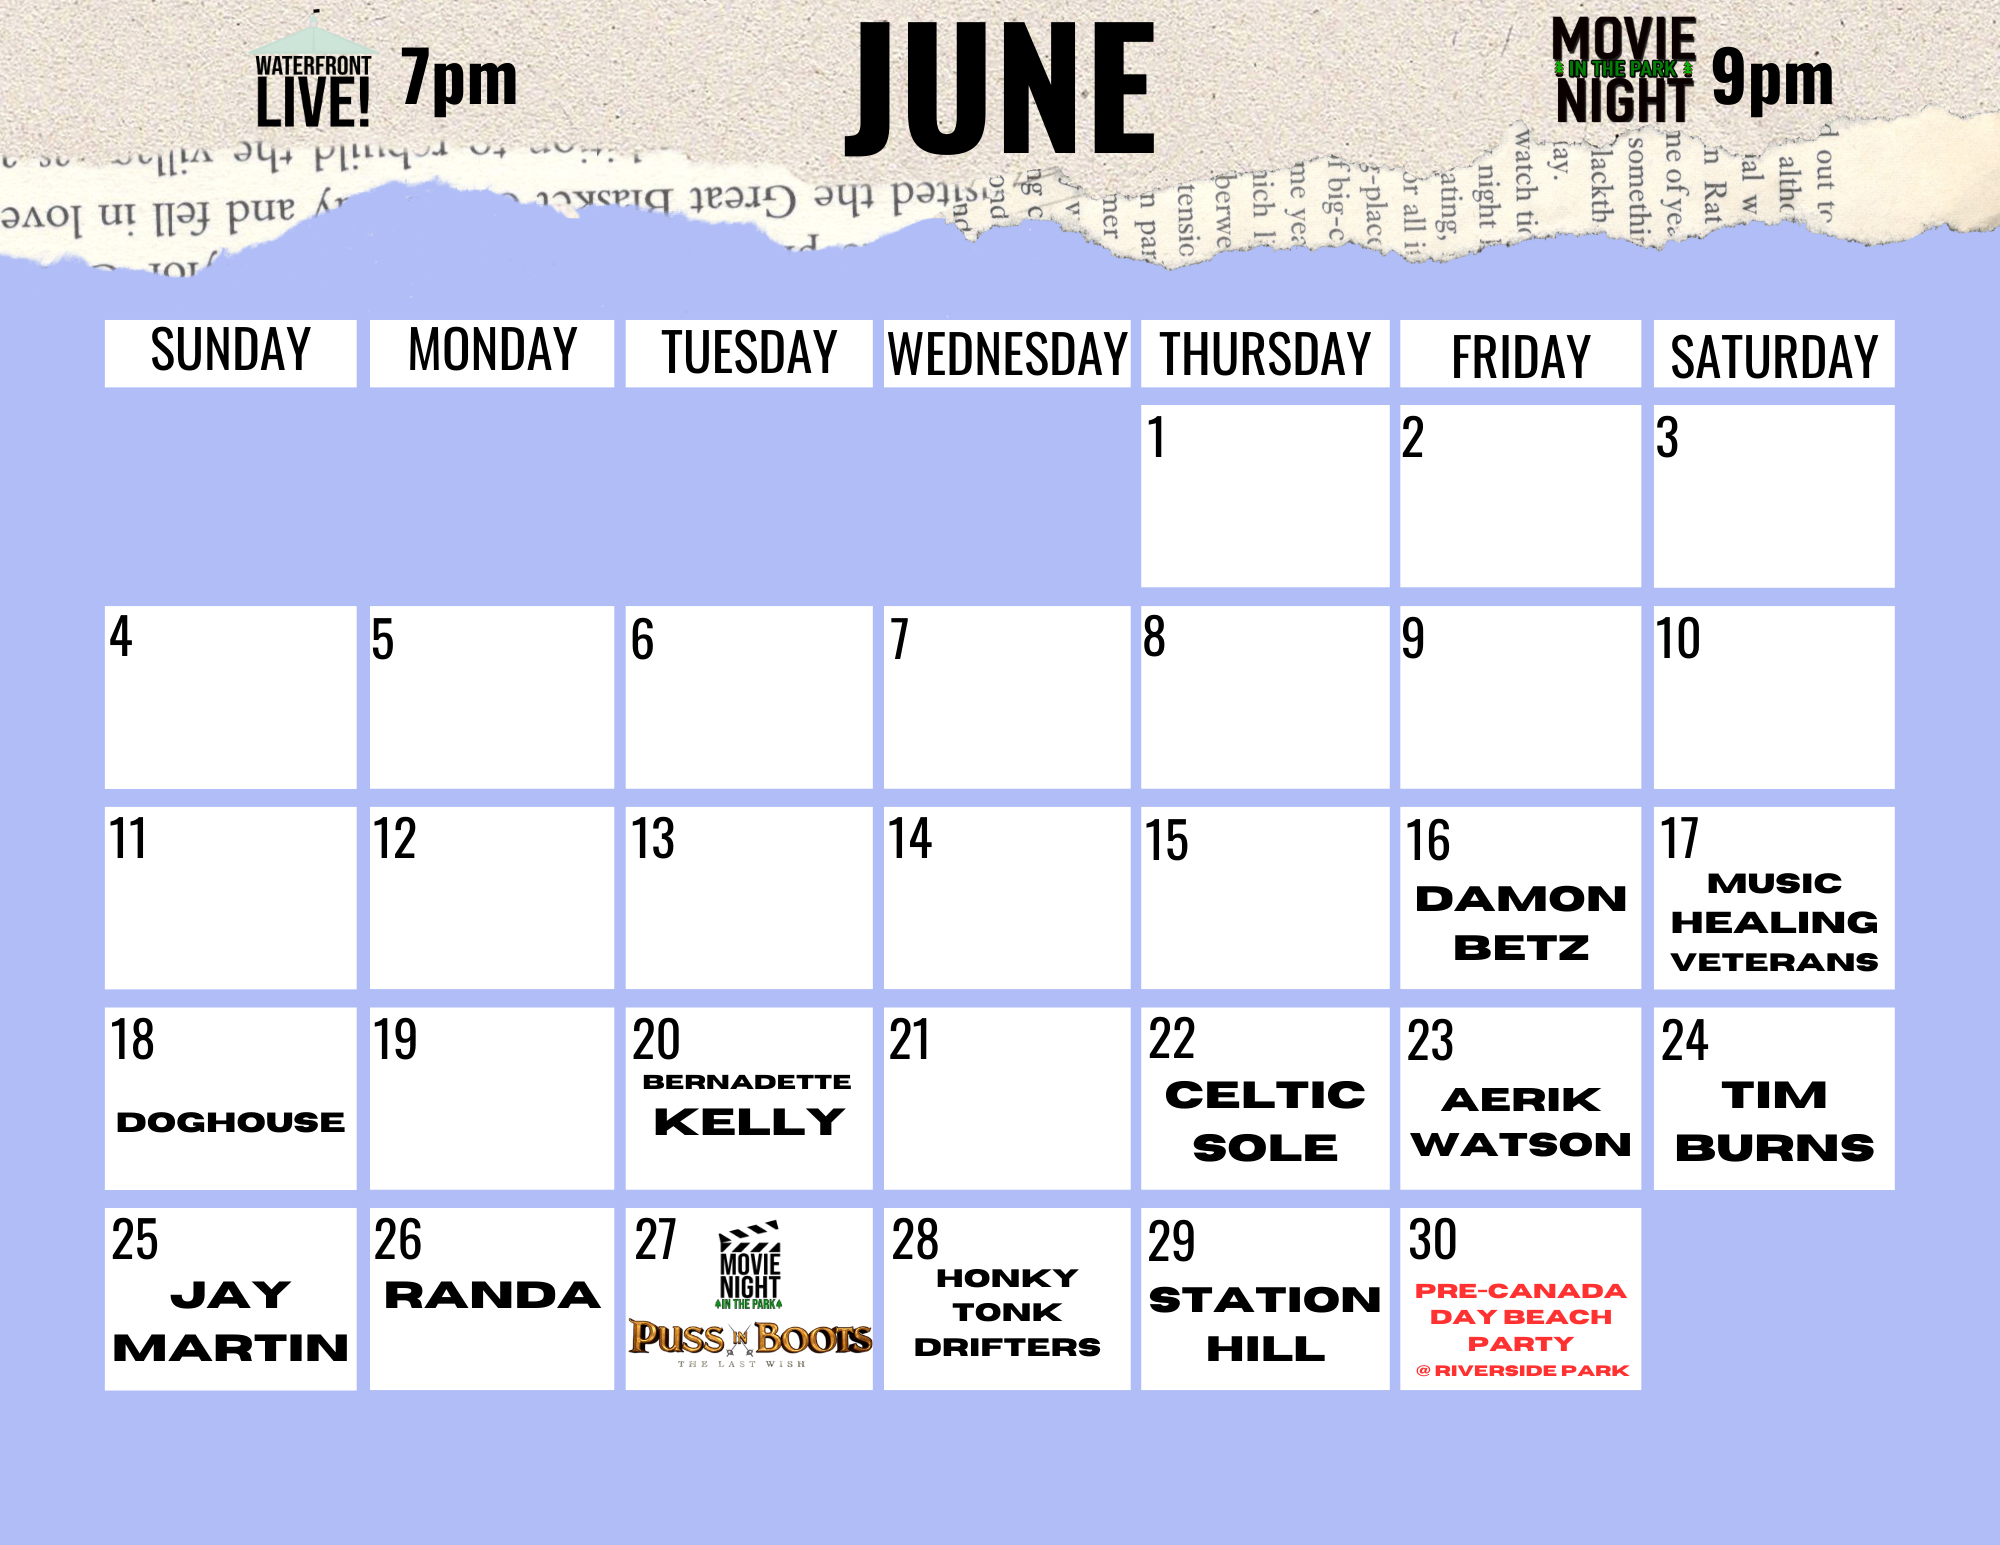 June Waterfront Live Schedule